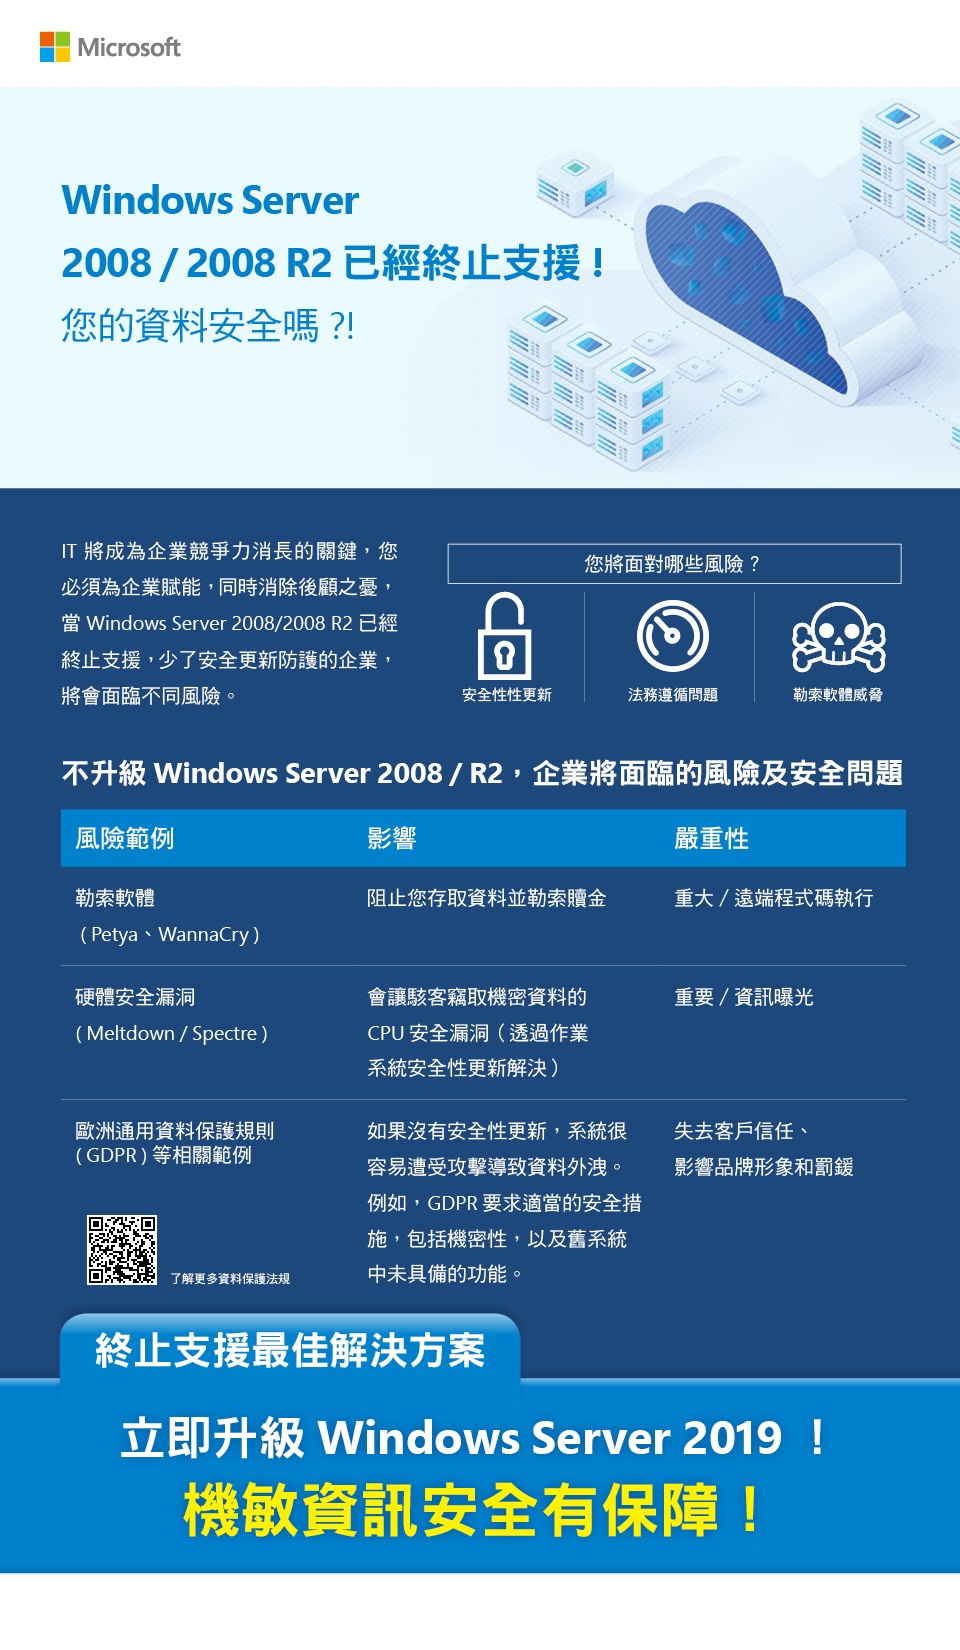 Windows Server 2019 - Windows Server 2008 & 2008R2停止支援